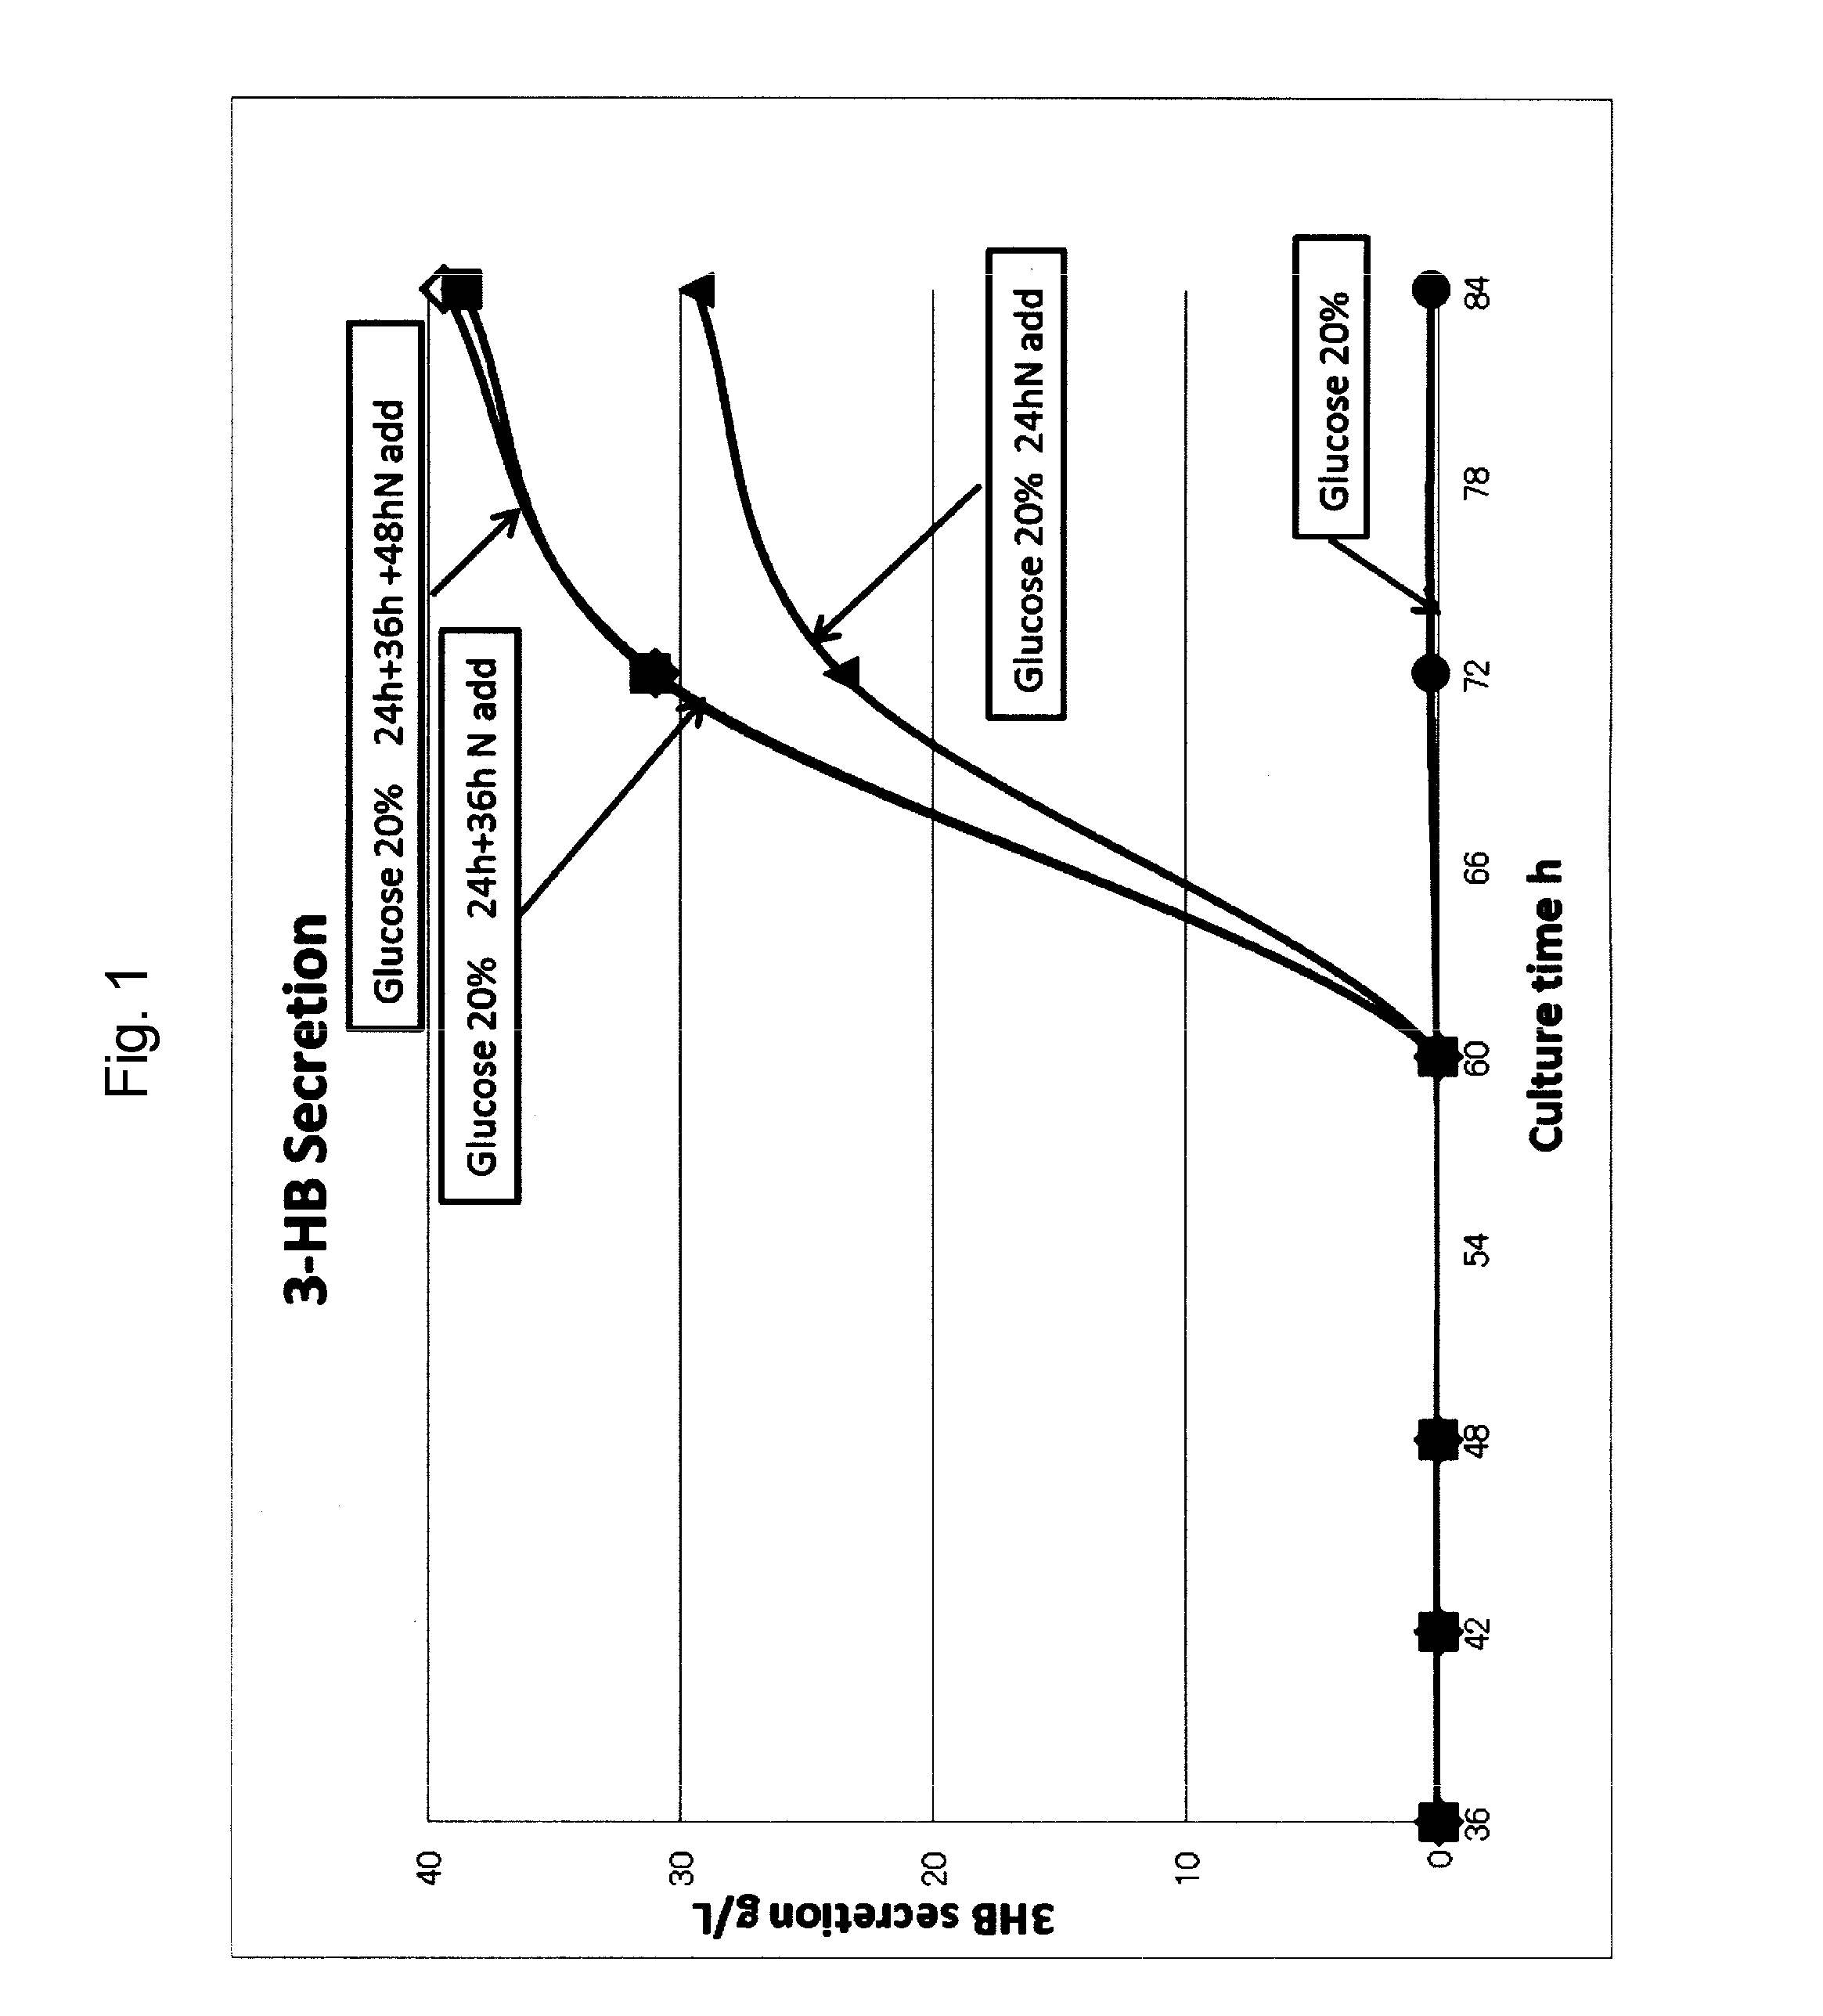 Method for manufacturing 3-hydroxybutyric acid using halomonas sp.